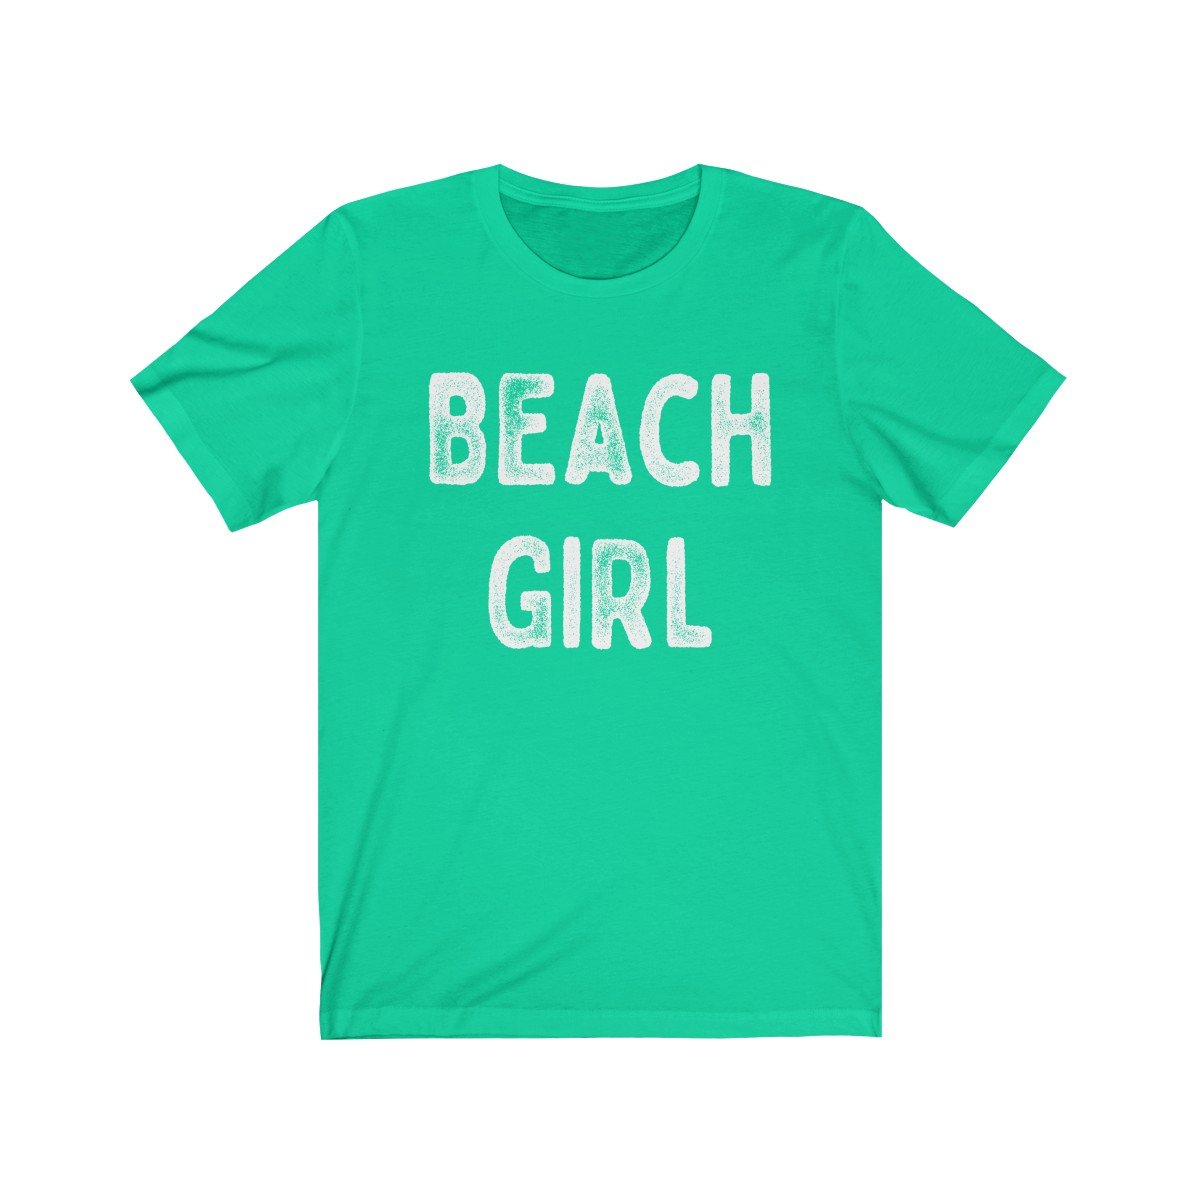 Beach Girl White Text Unisex Short Sleeve T-Shirt - Captain Woody's Beach Club